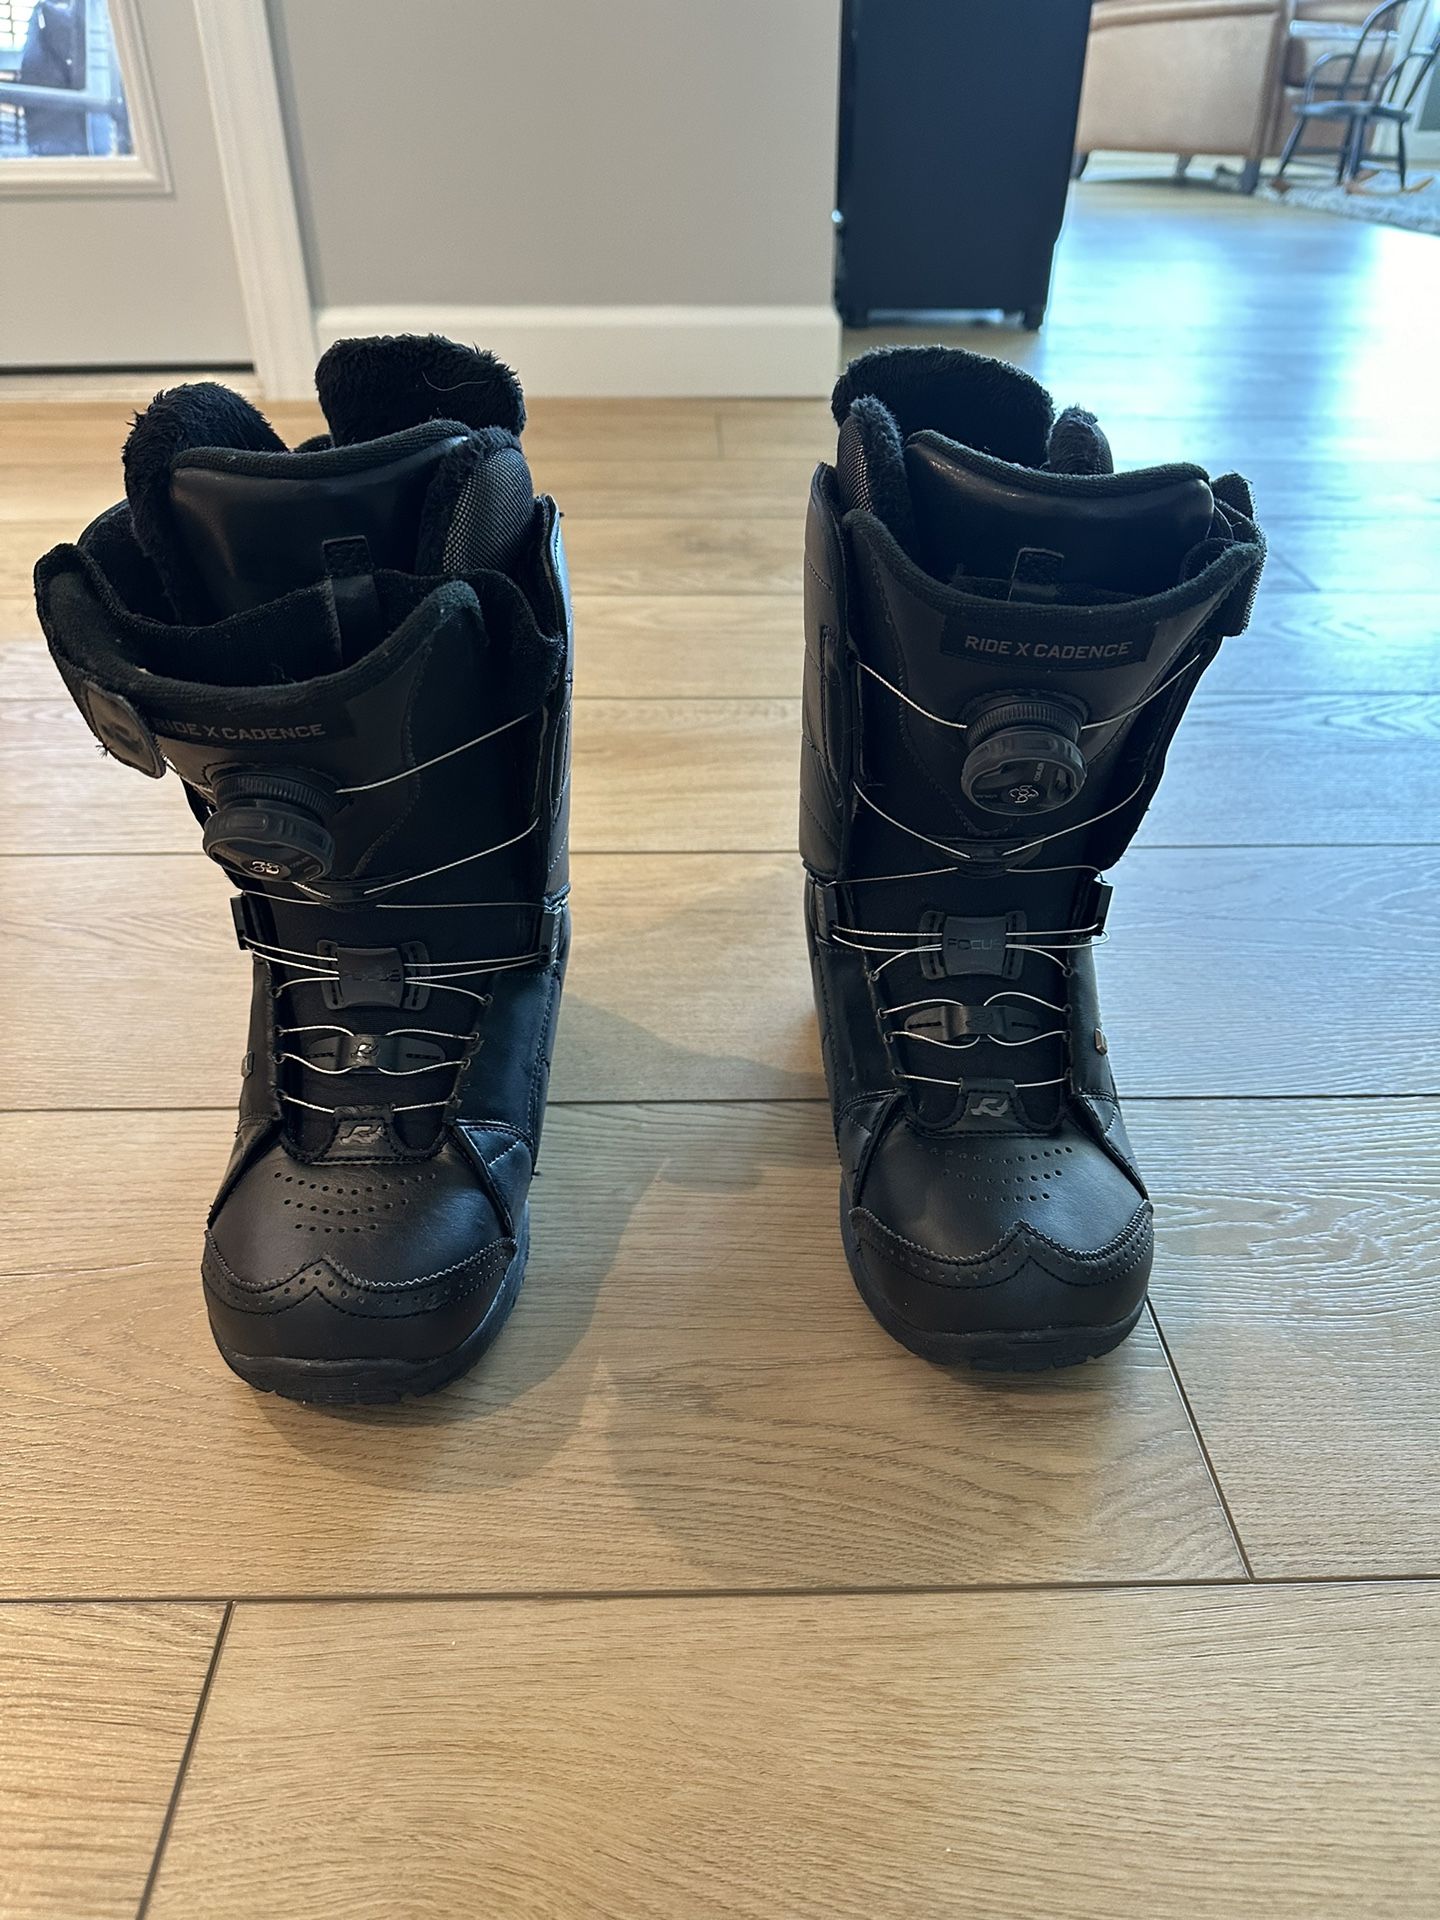 Women’s Snowboard Boots, Size 8 Boa